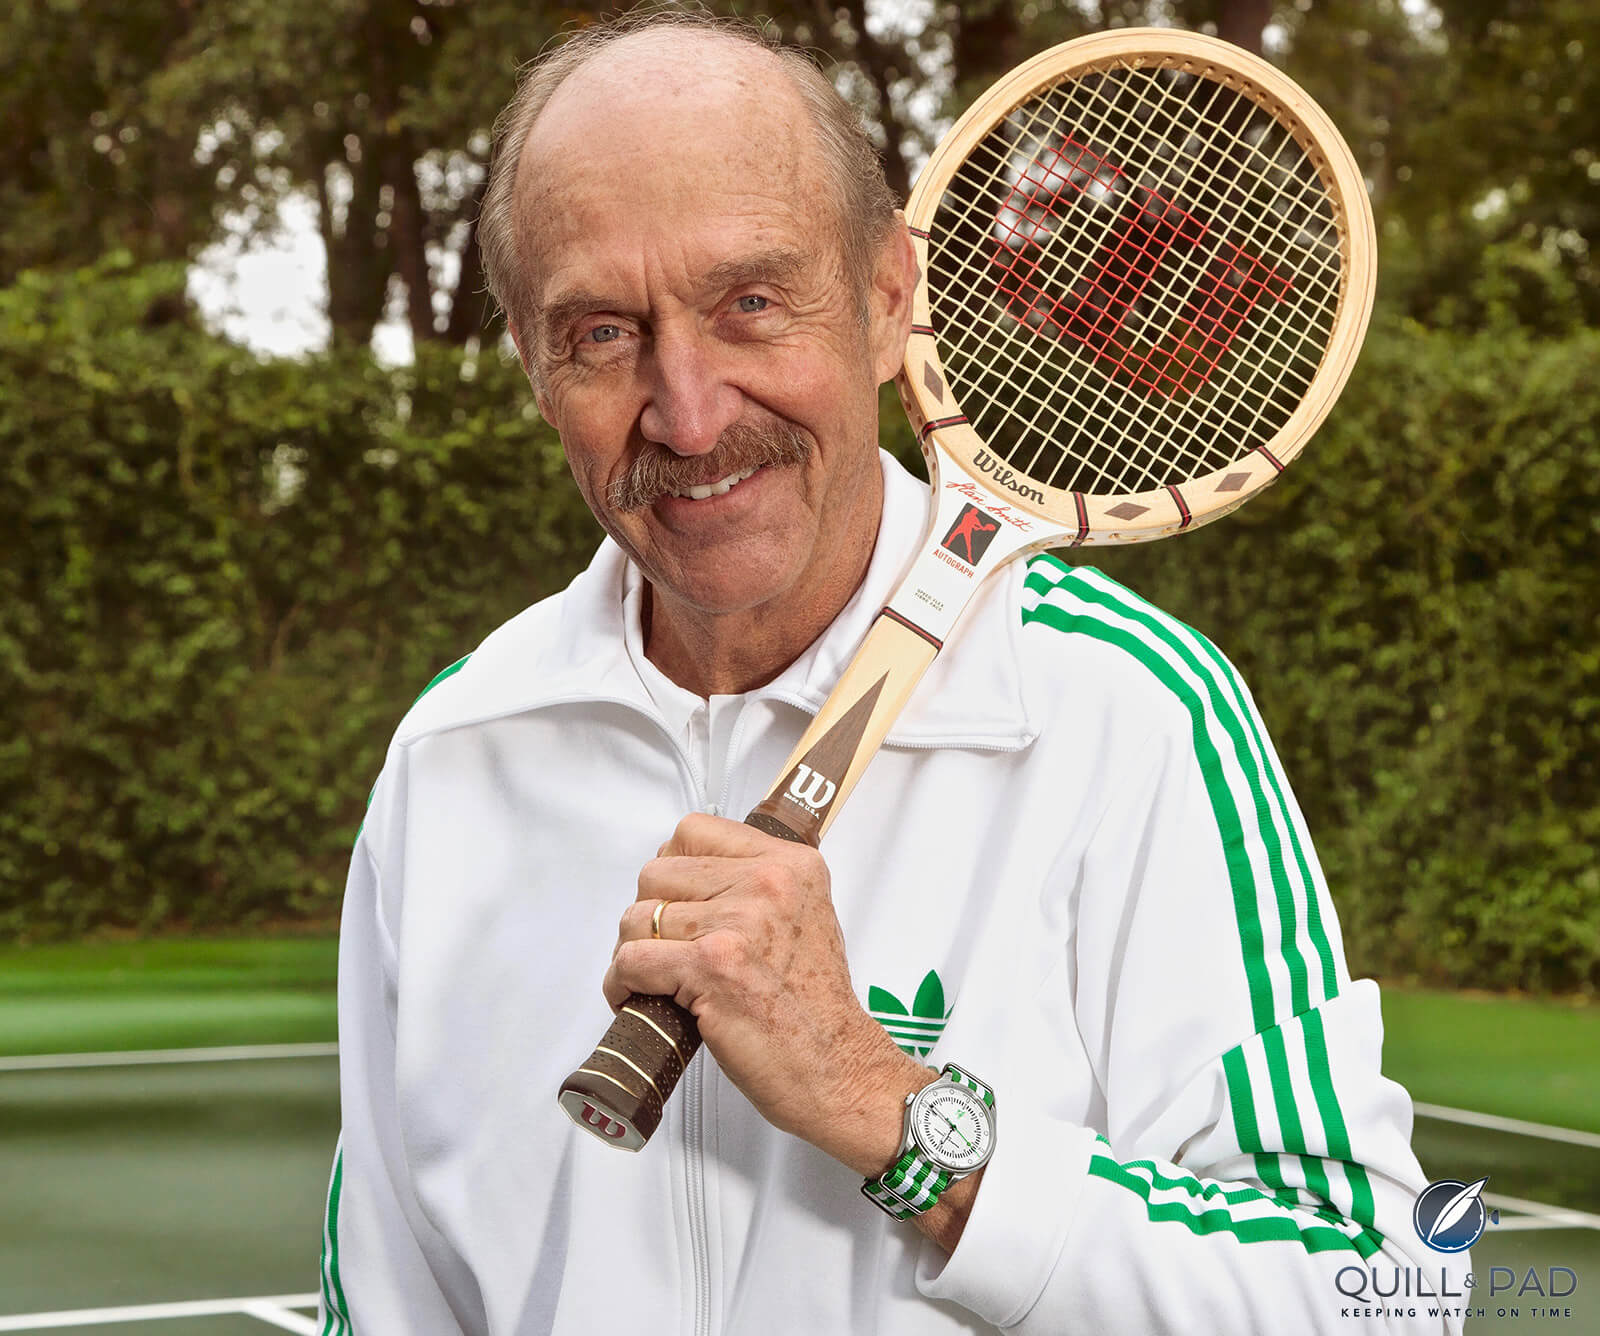 wilson stan smith tennis racket